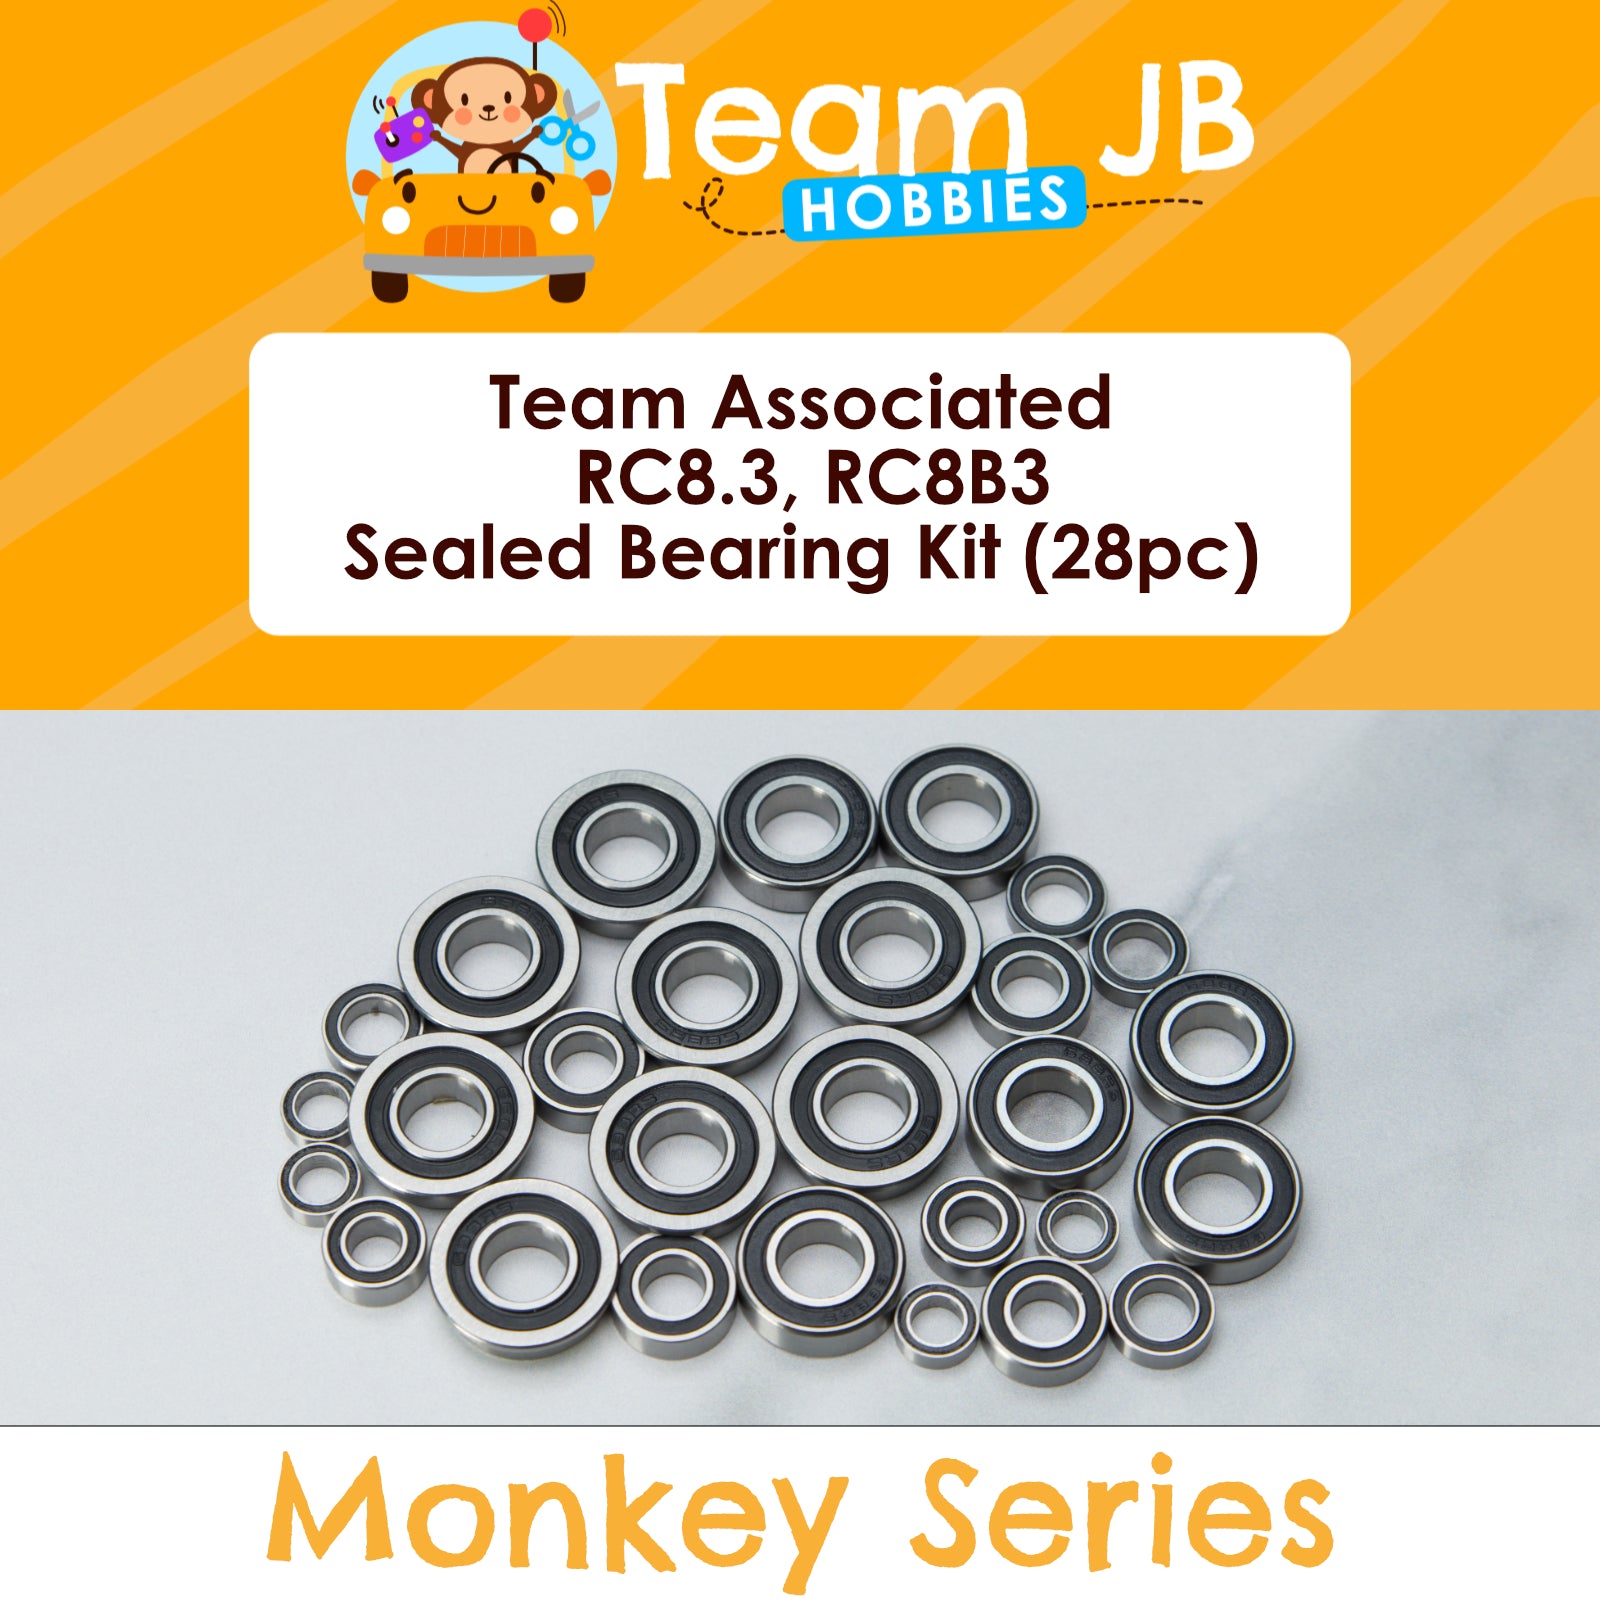 Team Associated RC8.3, RC8B3 - Sealed Bearing Kit